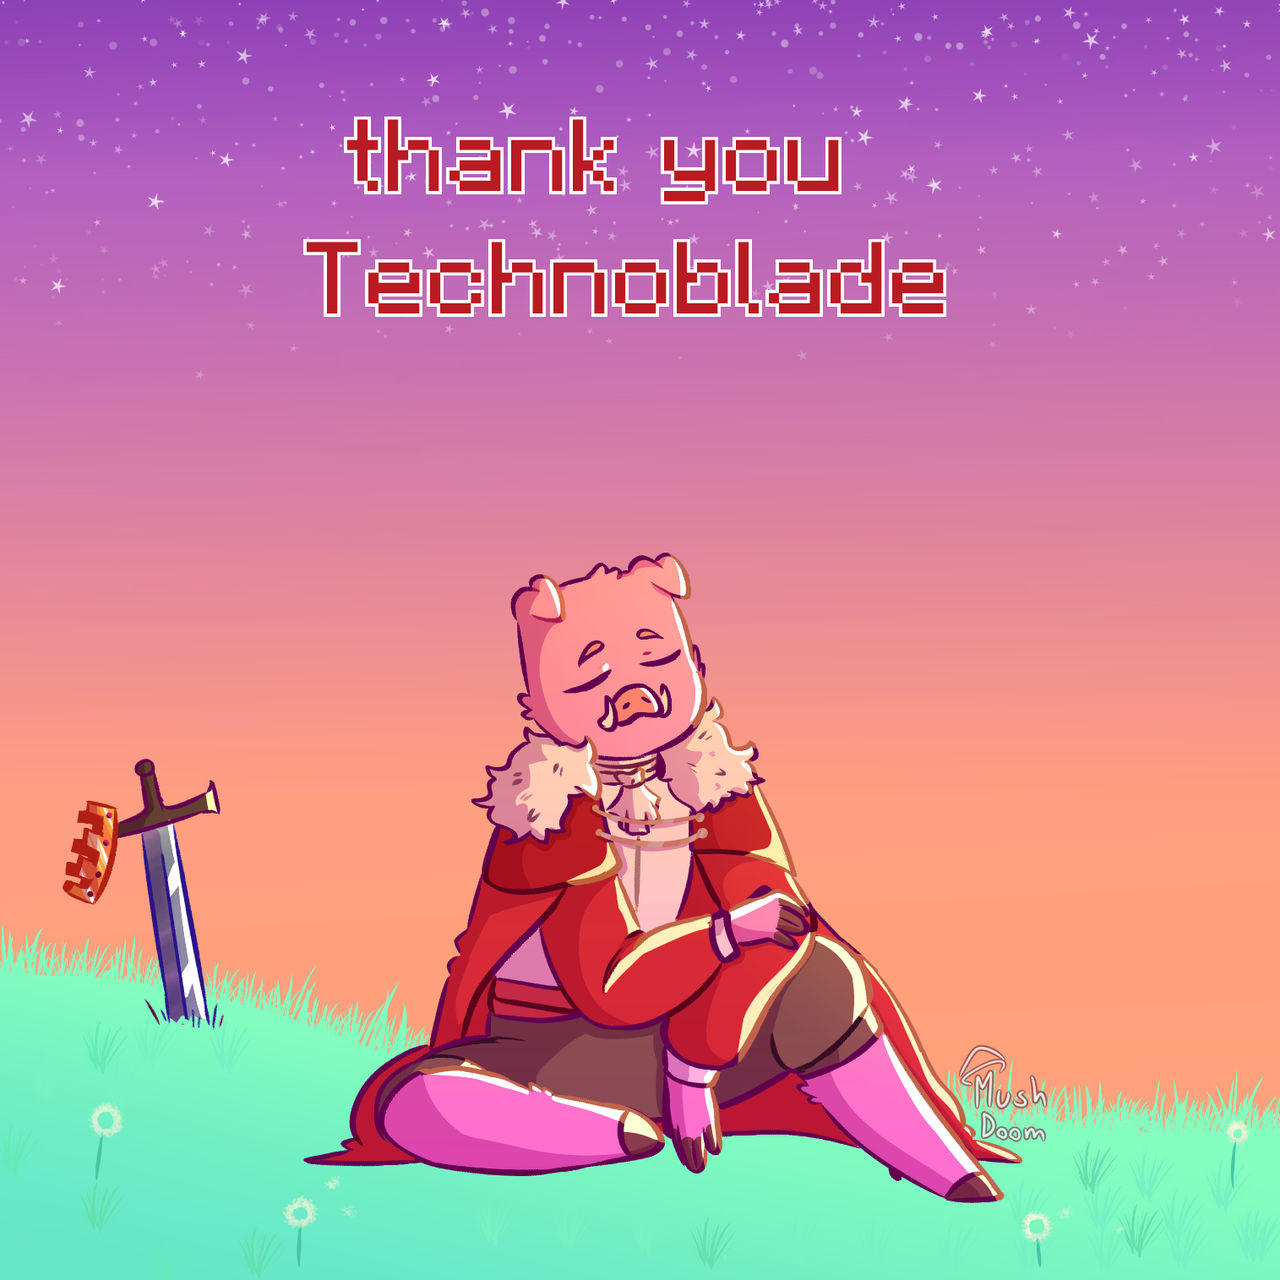 Dream says goodbye to Technoblade 